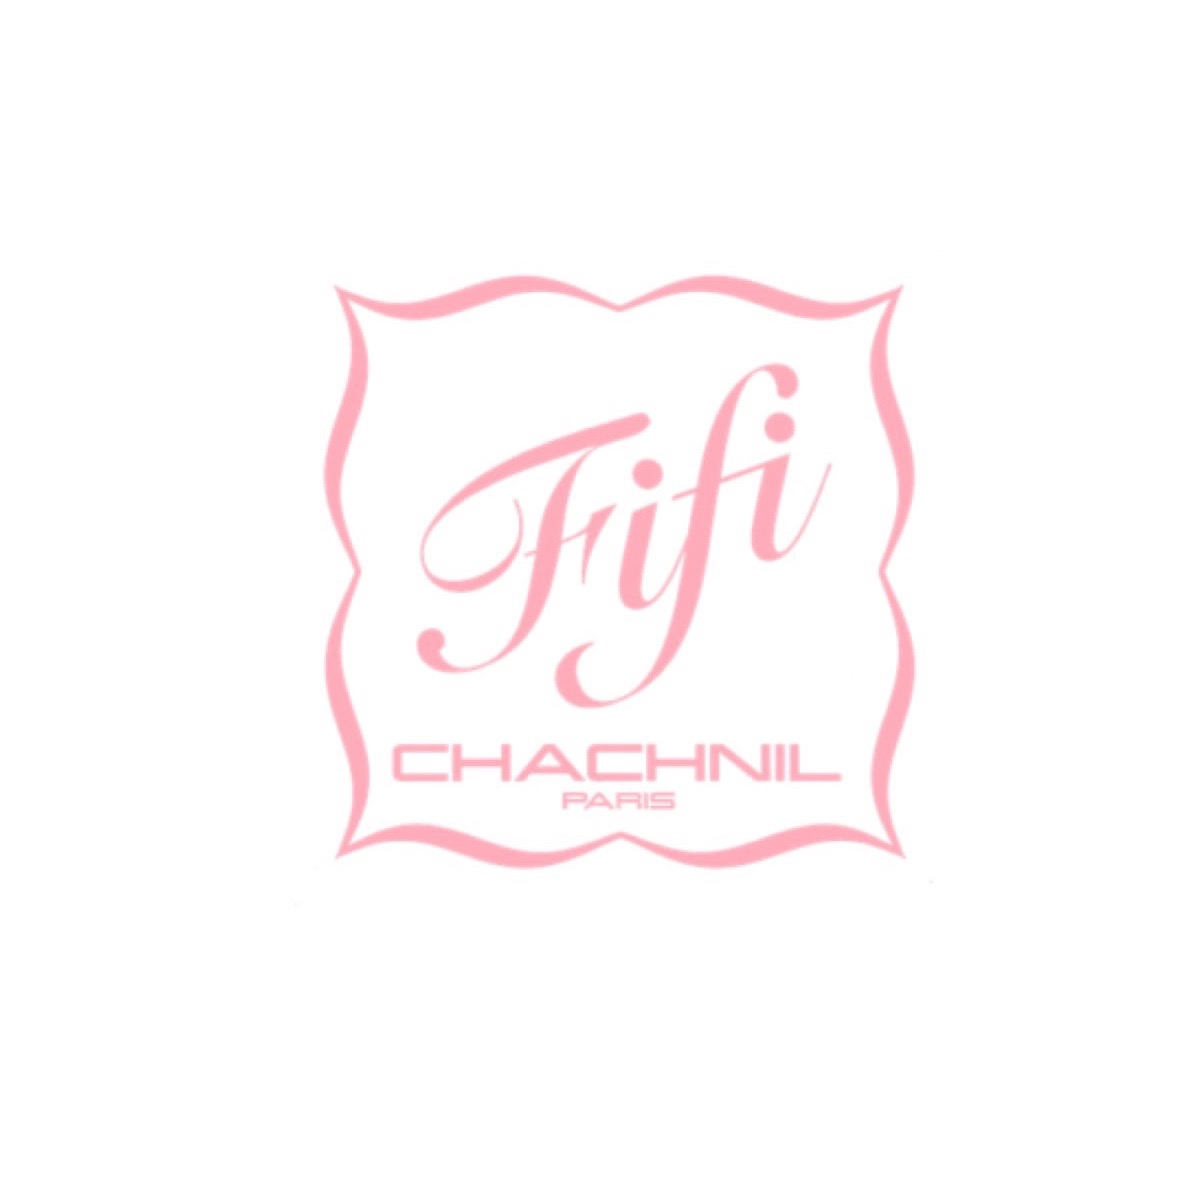 Fifi Chachnil – Faline Tokyo